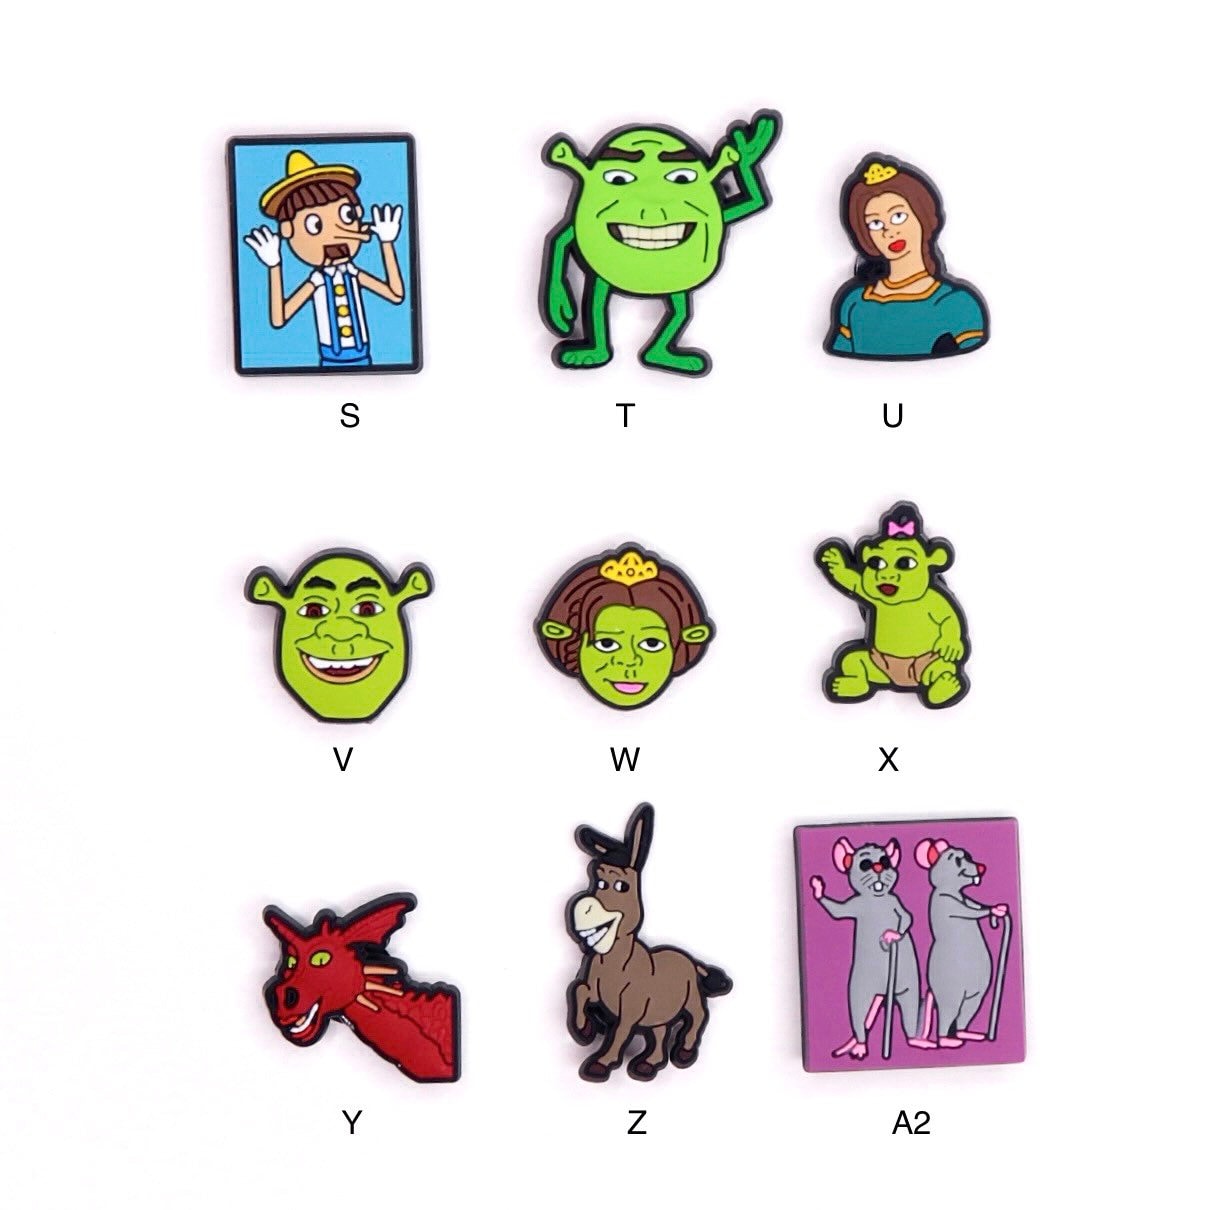 Shrek and Fiona Crocs Charms Ogre Donkey Cartoon 2000's Movie Kids